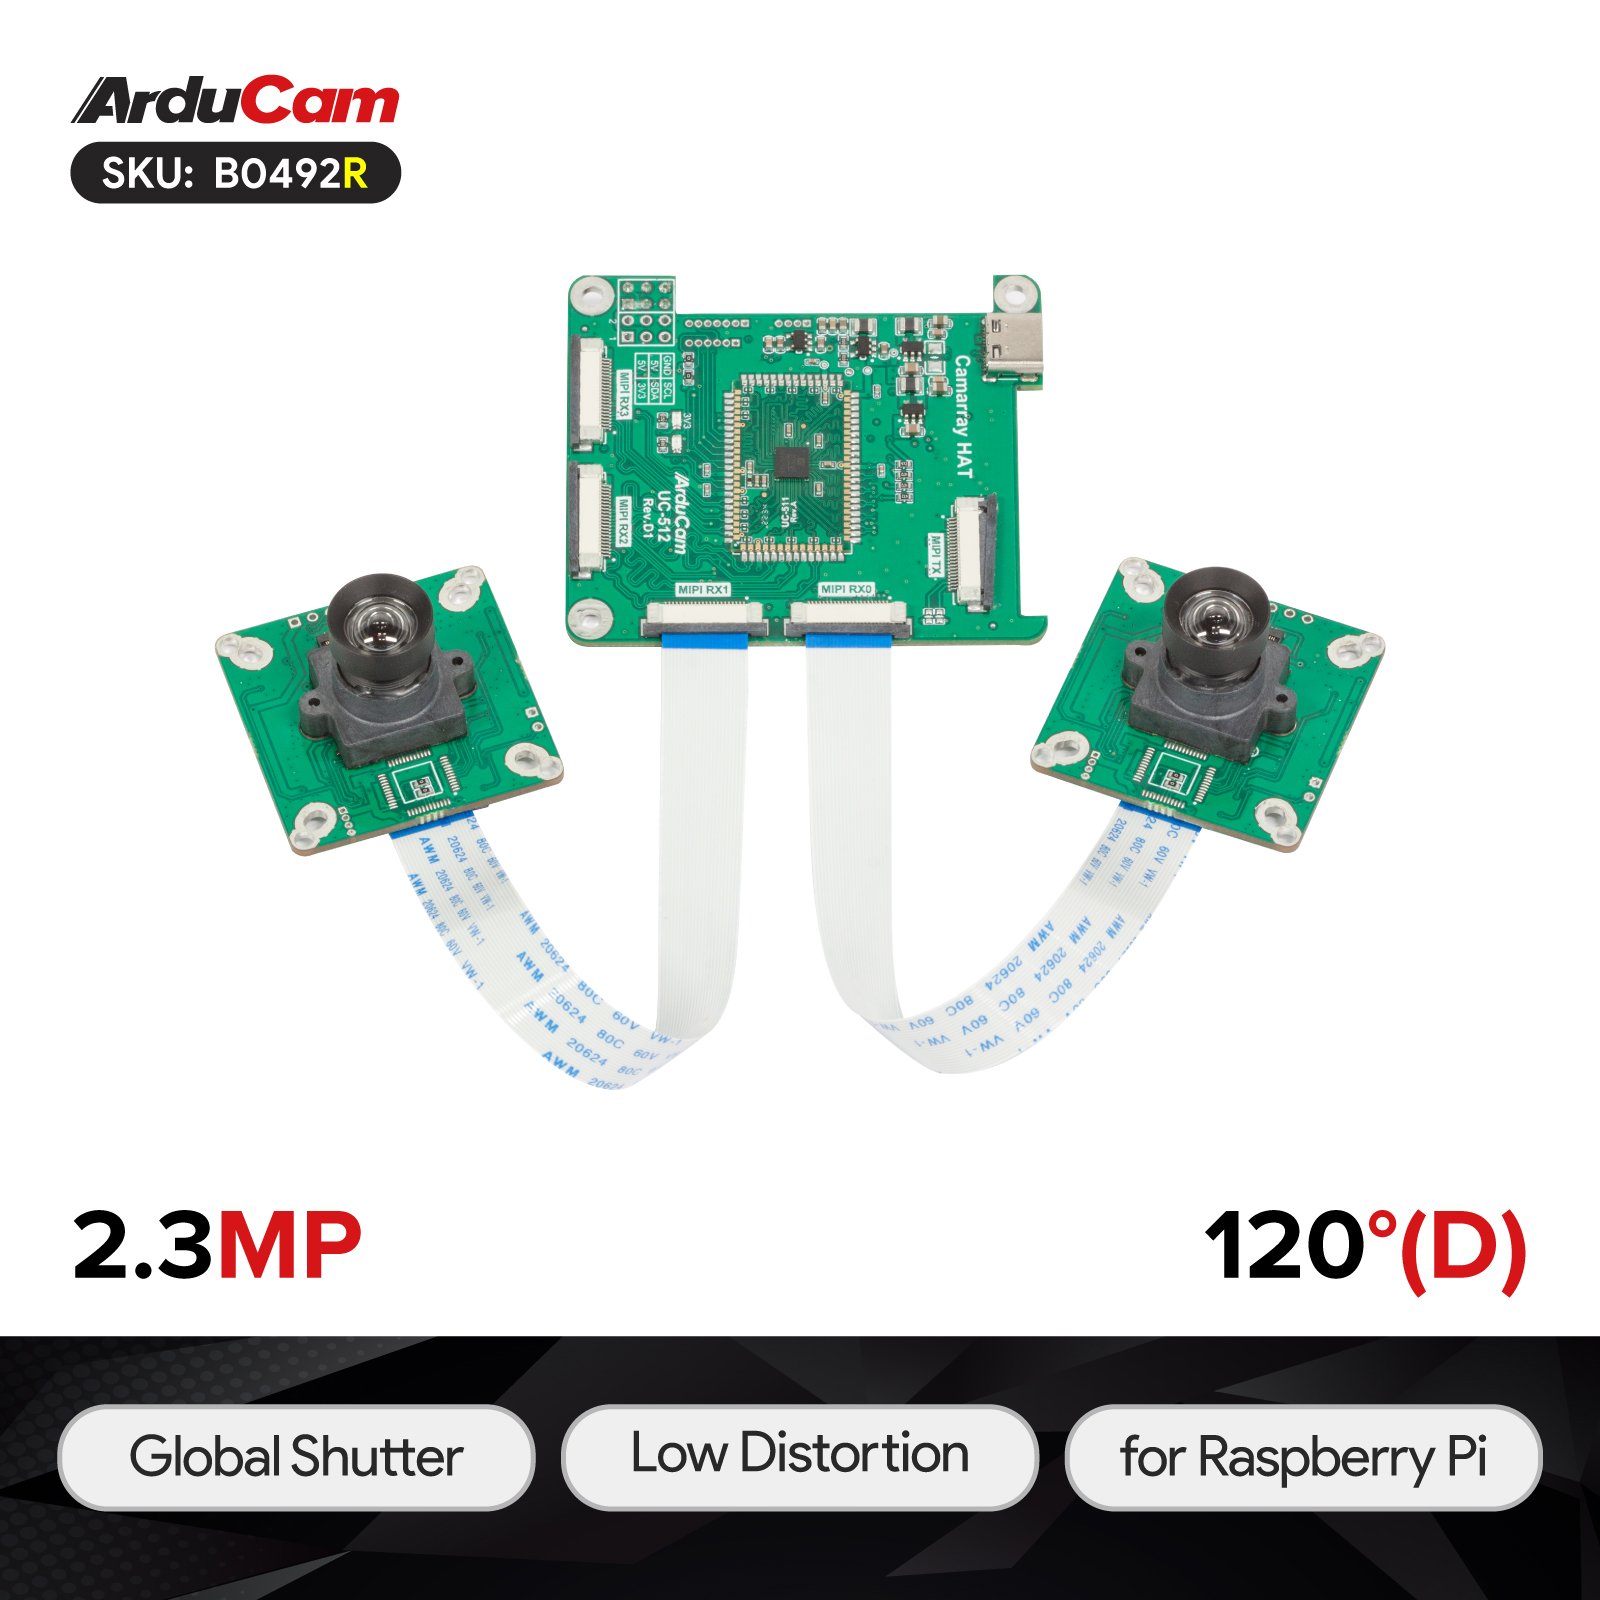 Arducam 2.3MP*2 AR0234 Color Global Shutter Synchronized Stereo Camera  Bundle Kit for Raspberry Pi - Arducam